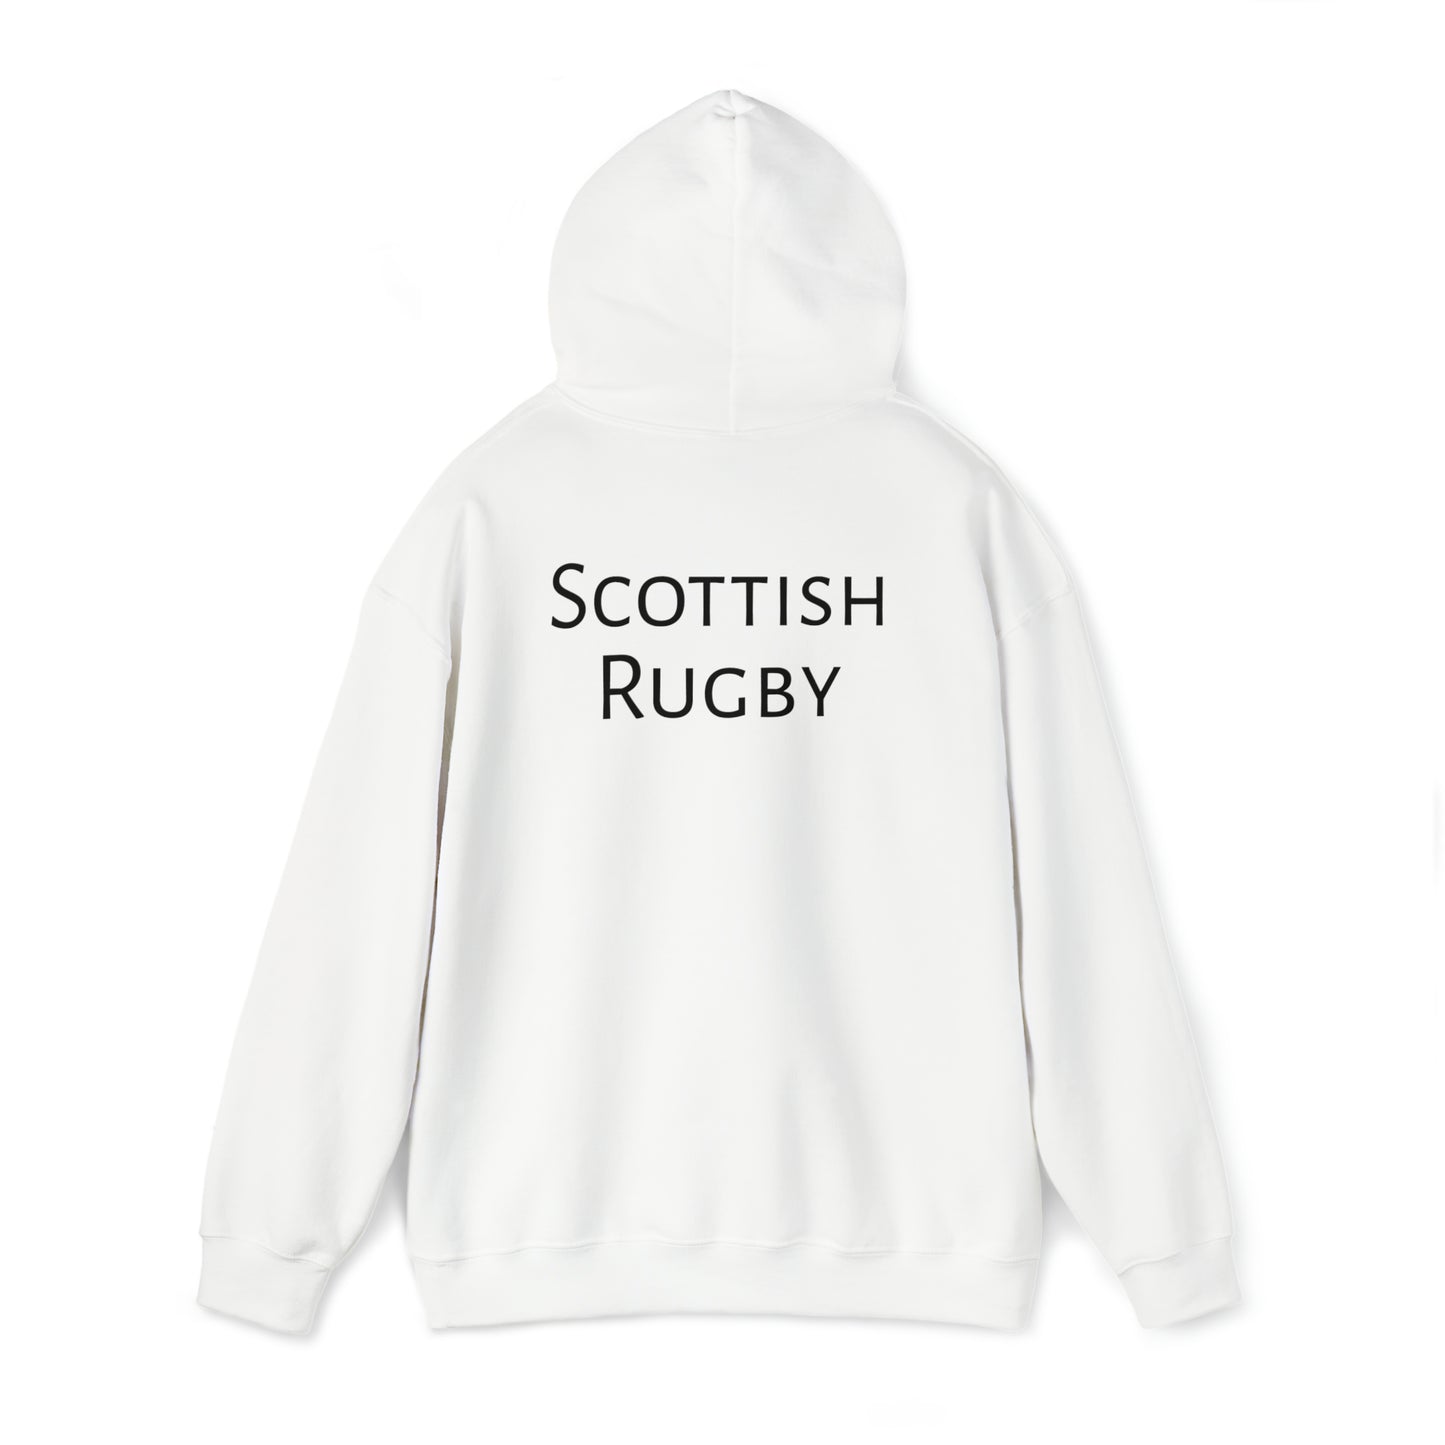 Post Match Scotland - light hoodies